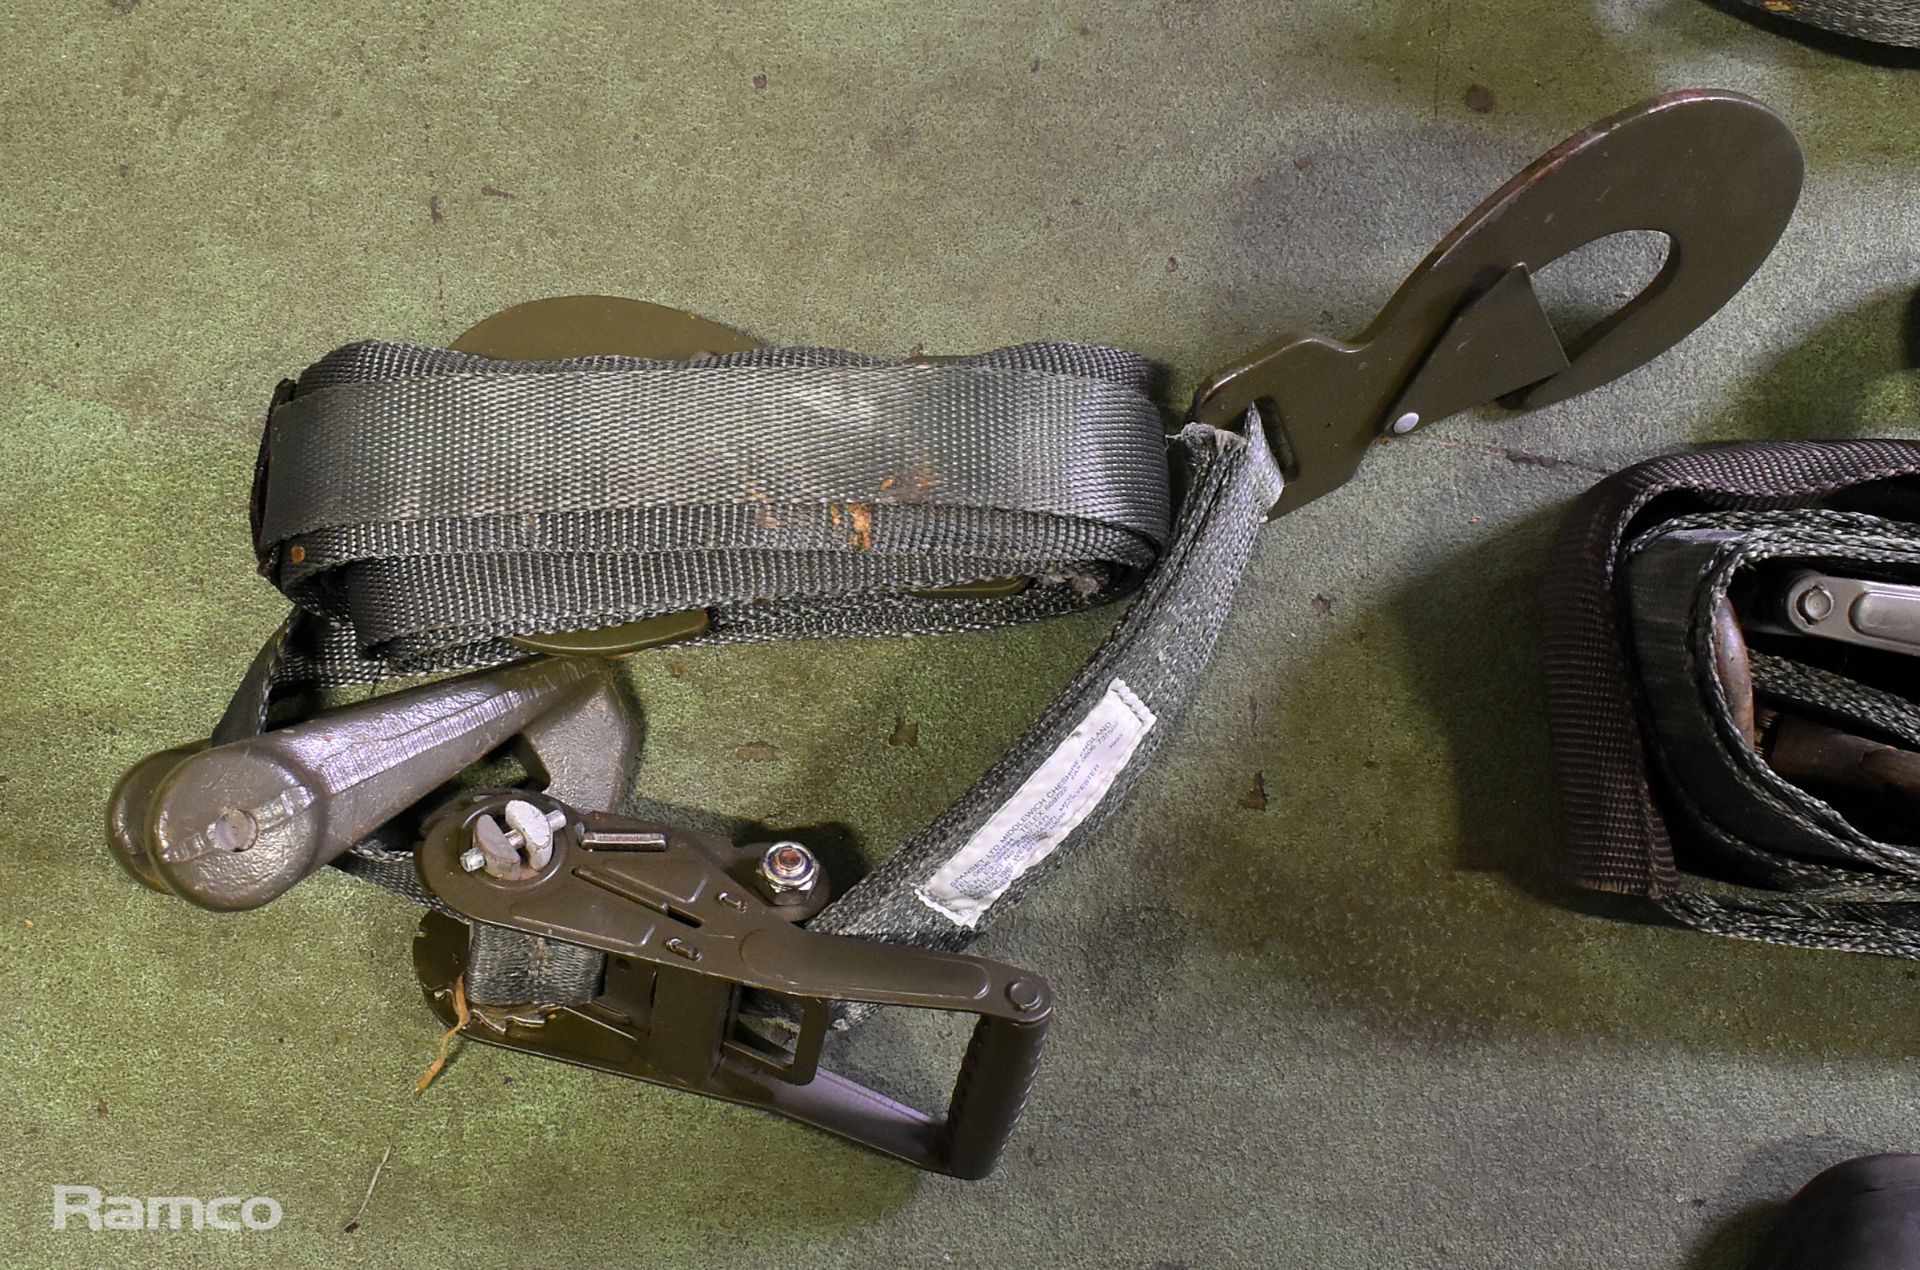 4x Heavy duty spanset ratchet straps - Image 2 of 5